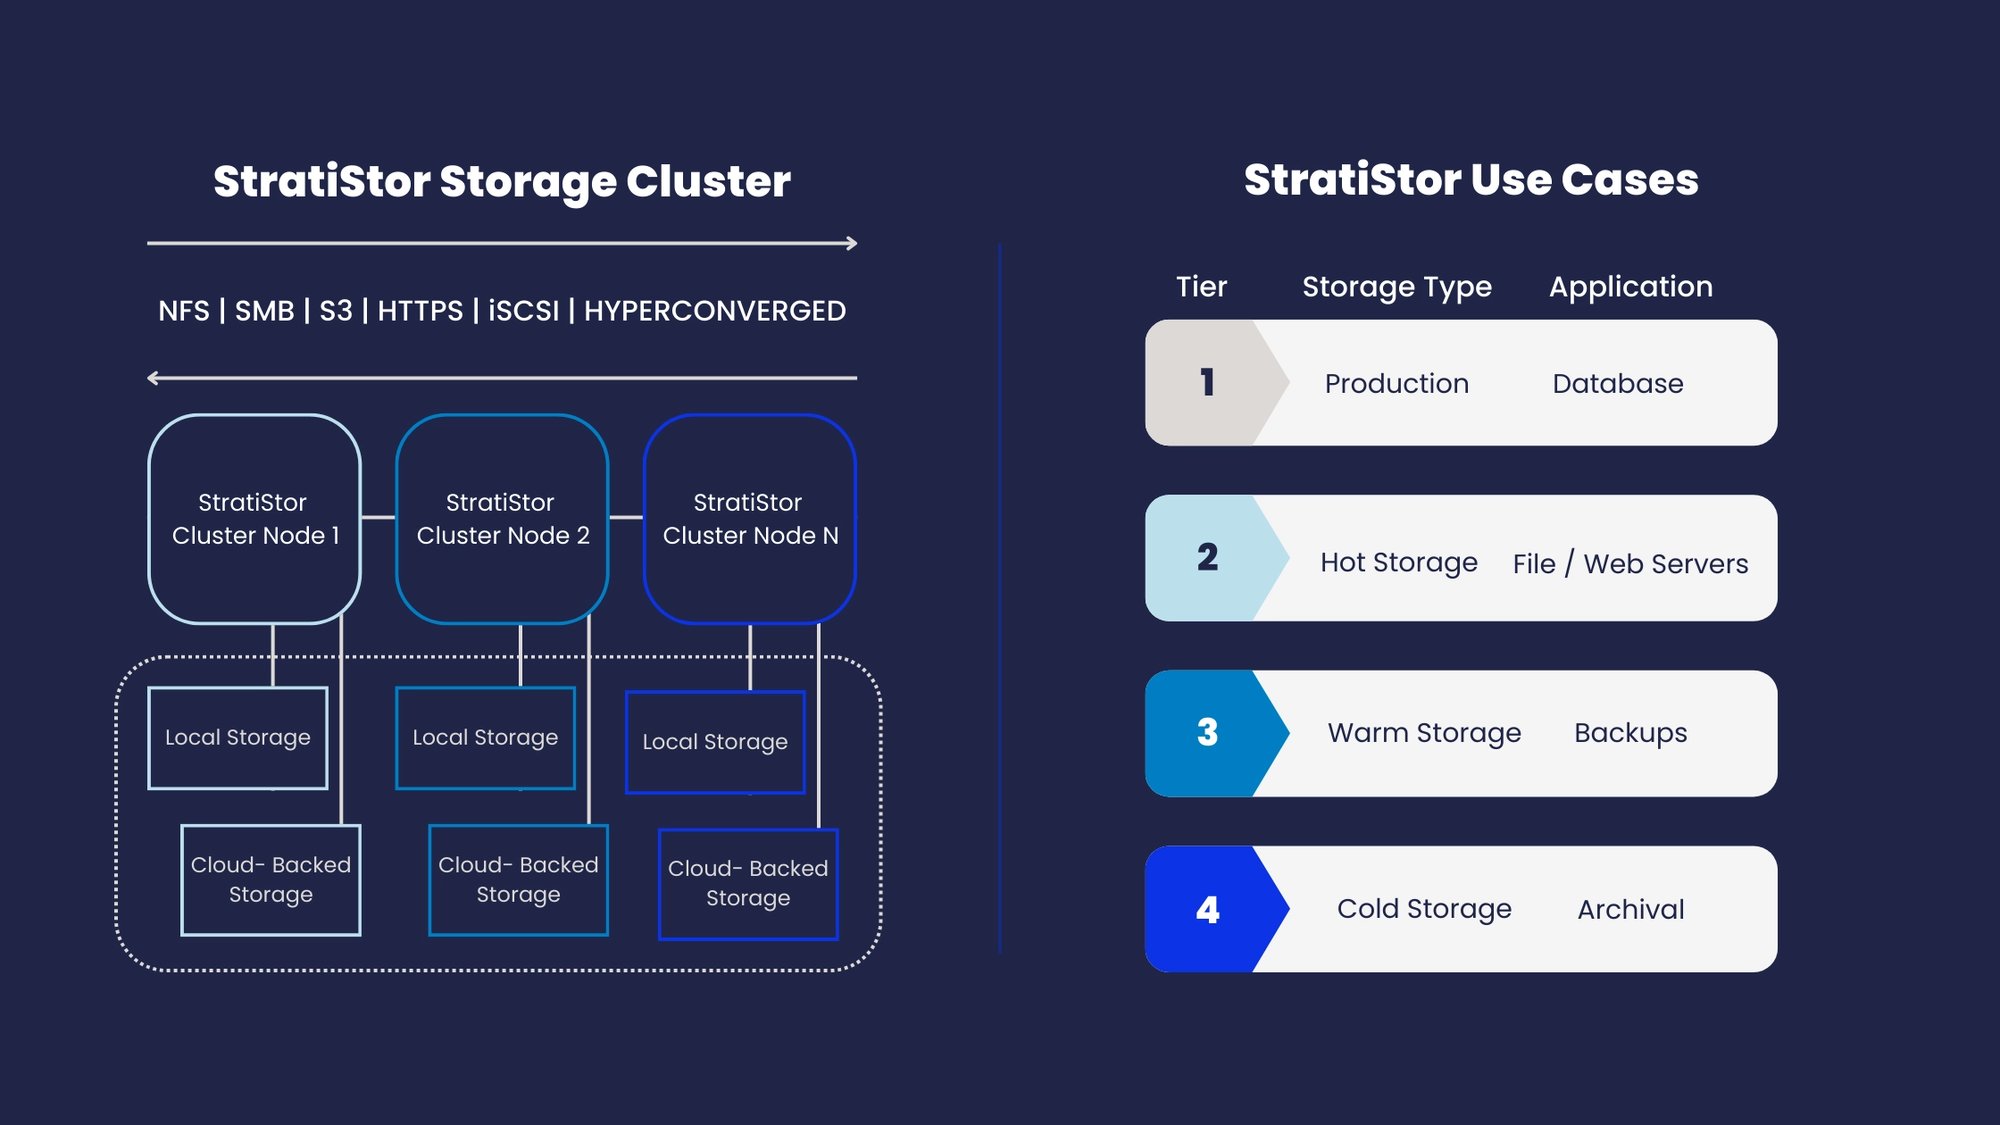 StratiStor Storage Cluster